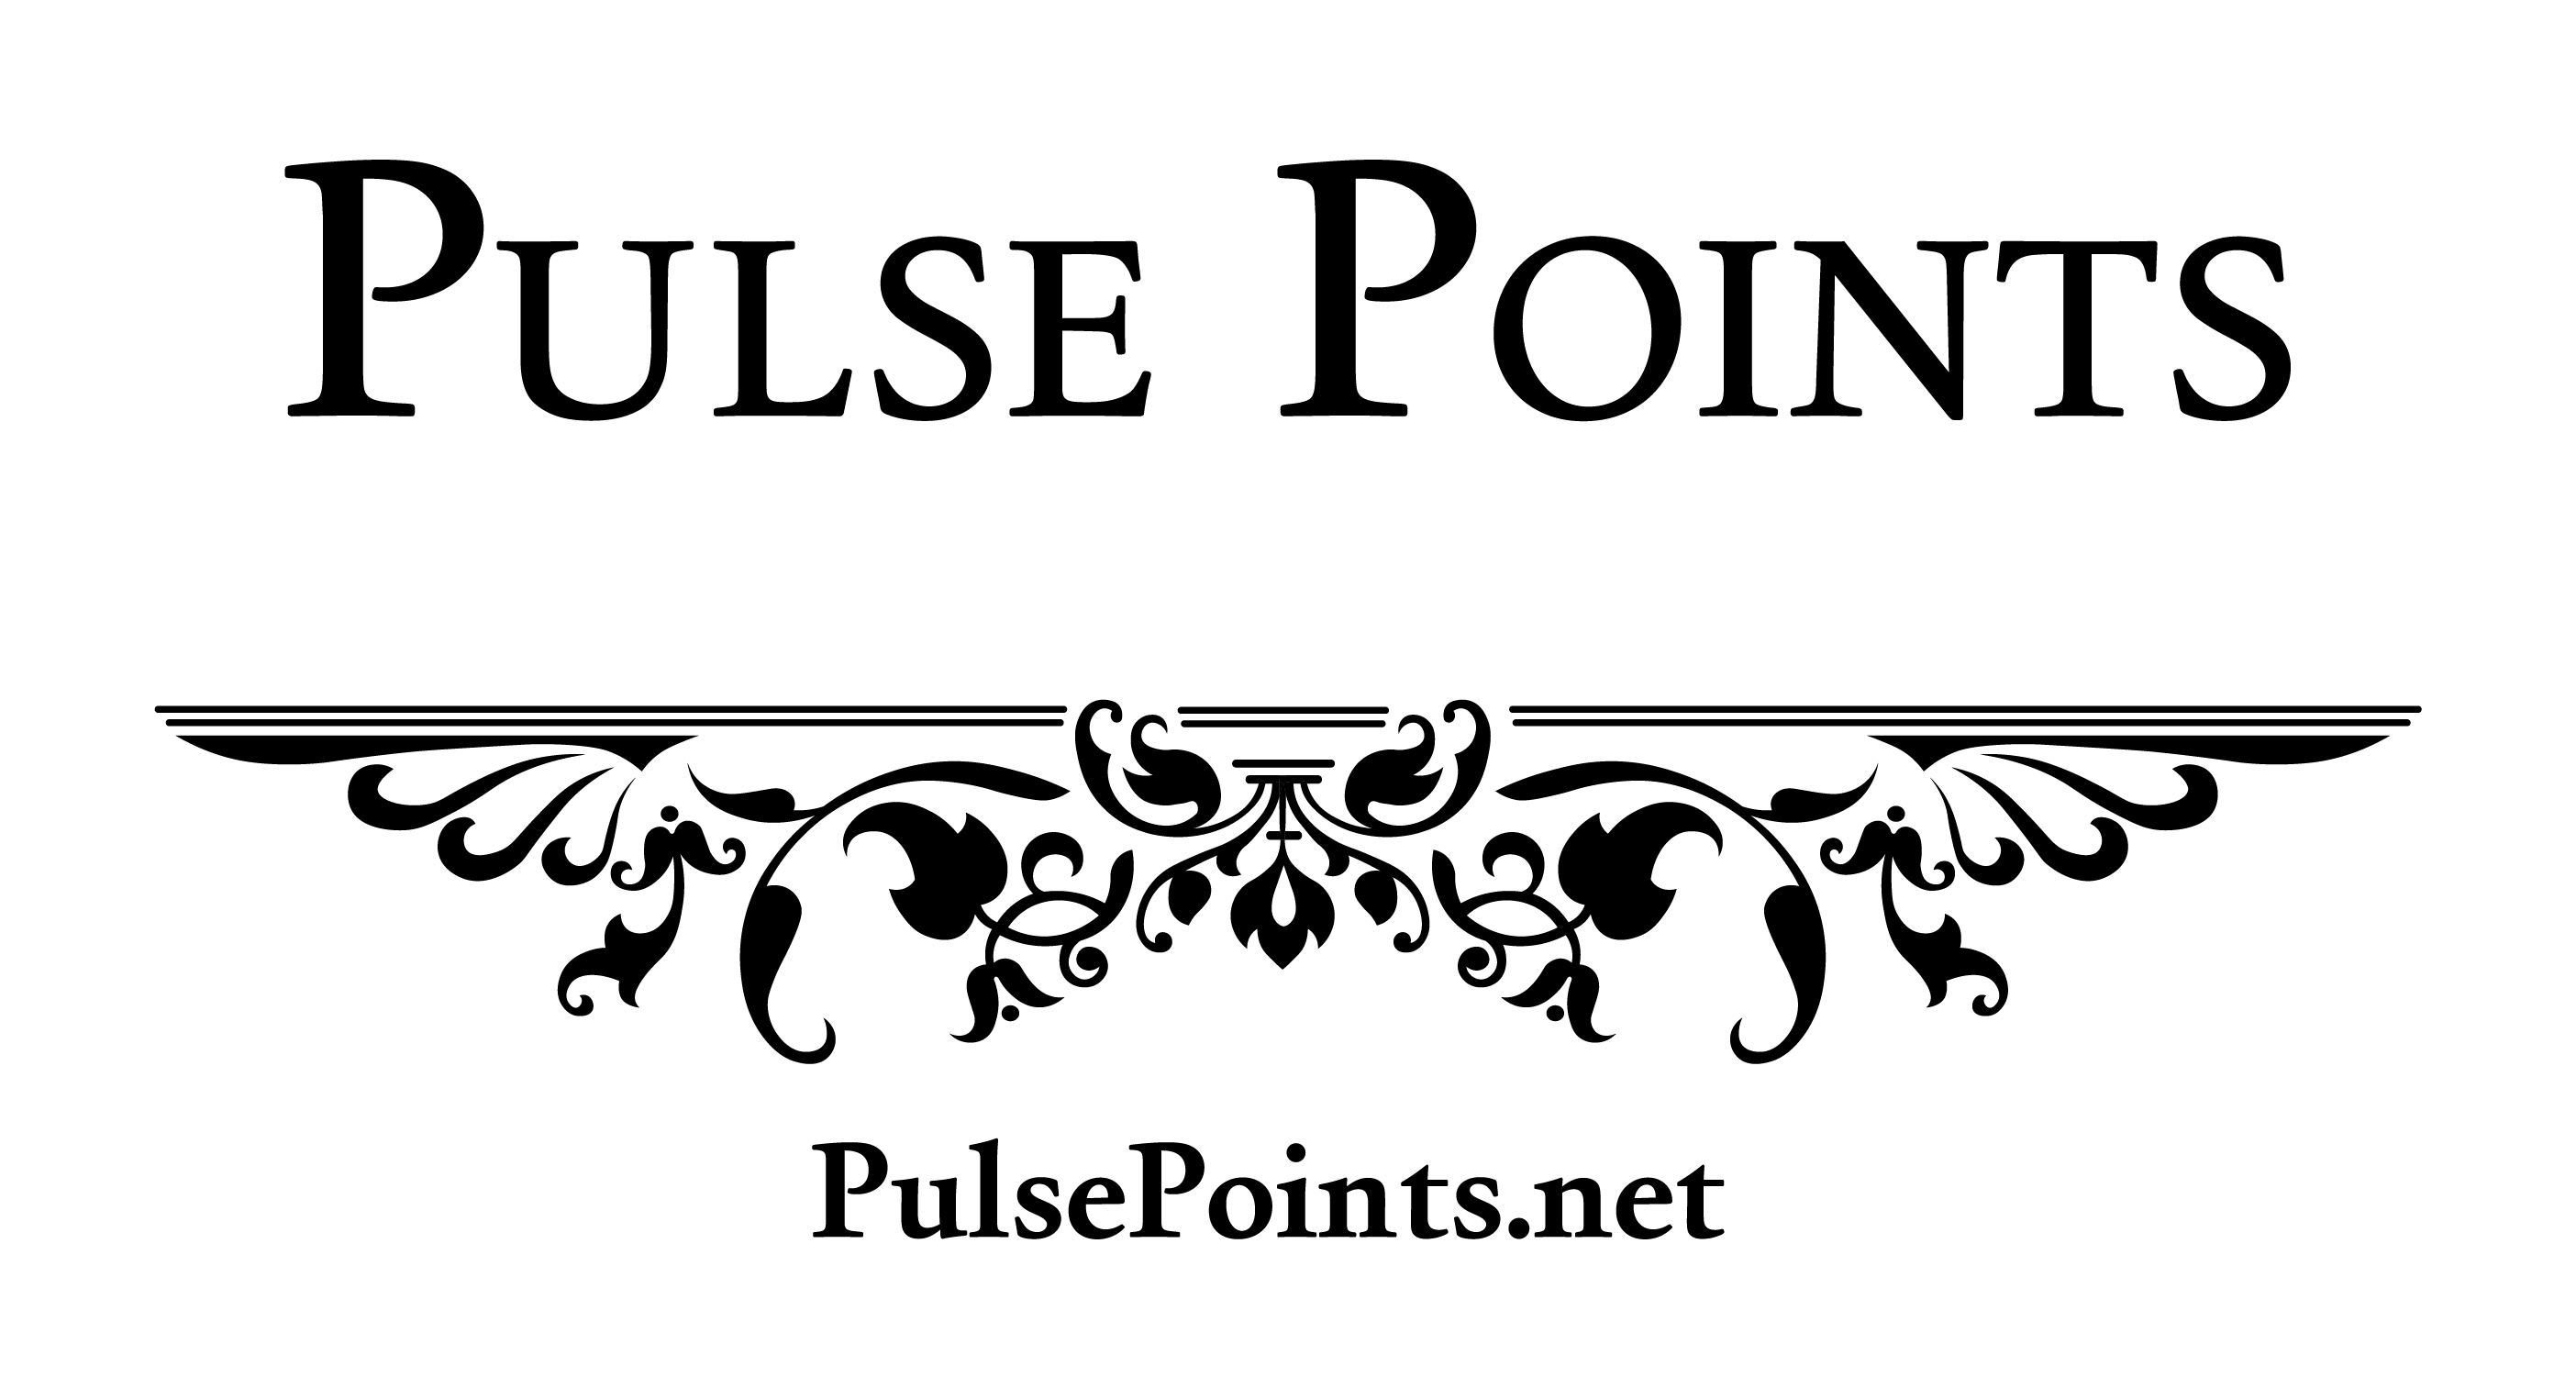 PulsePoints net jpg-01